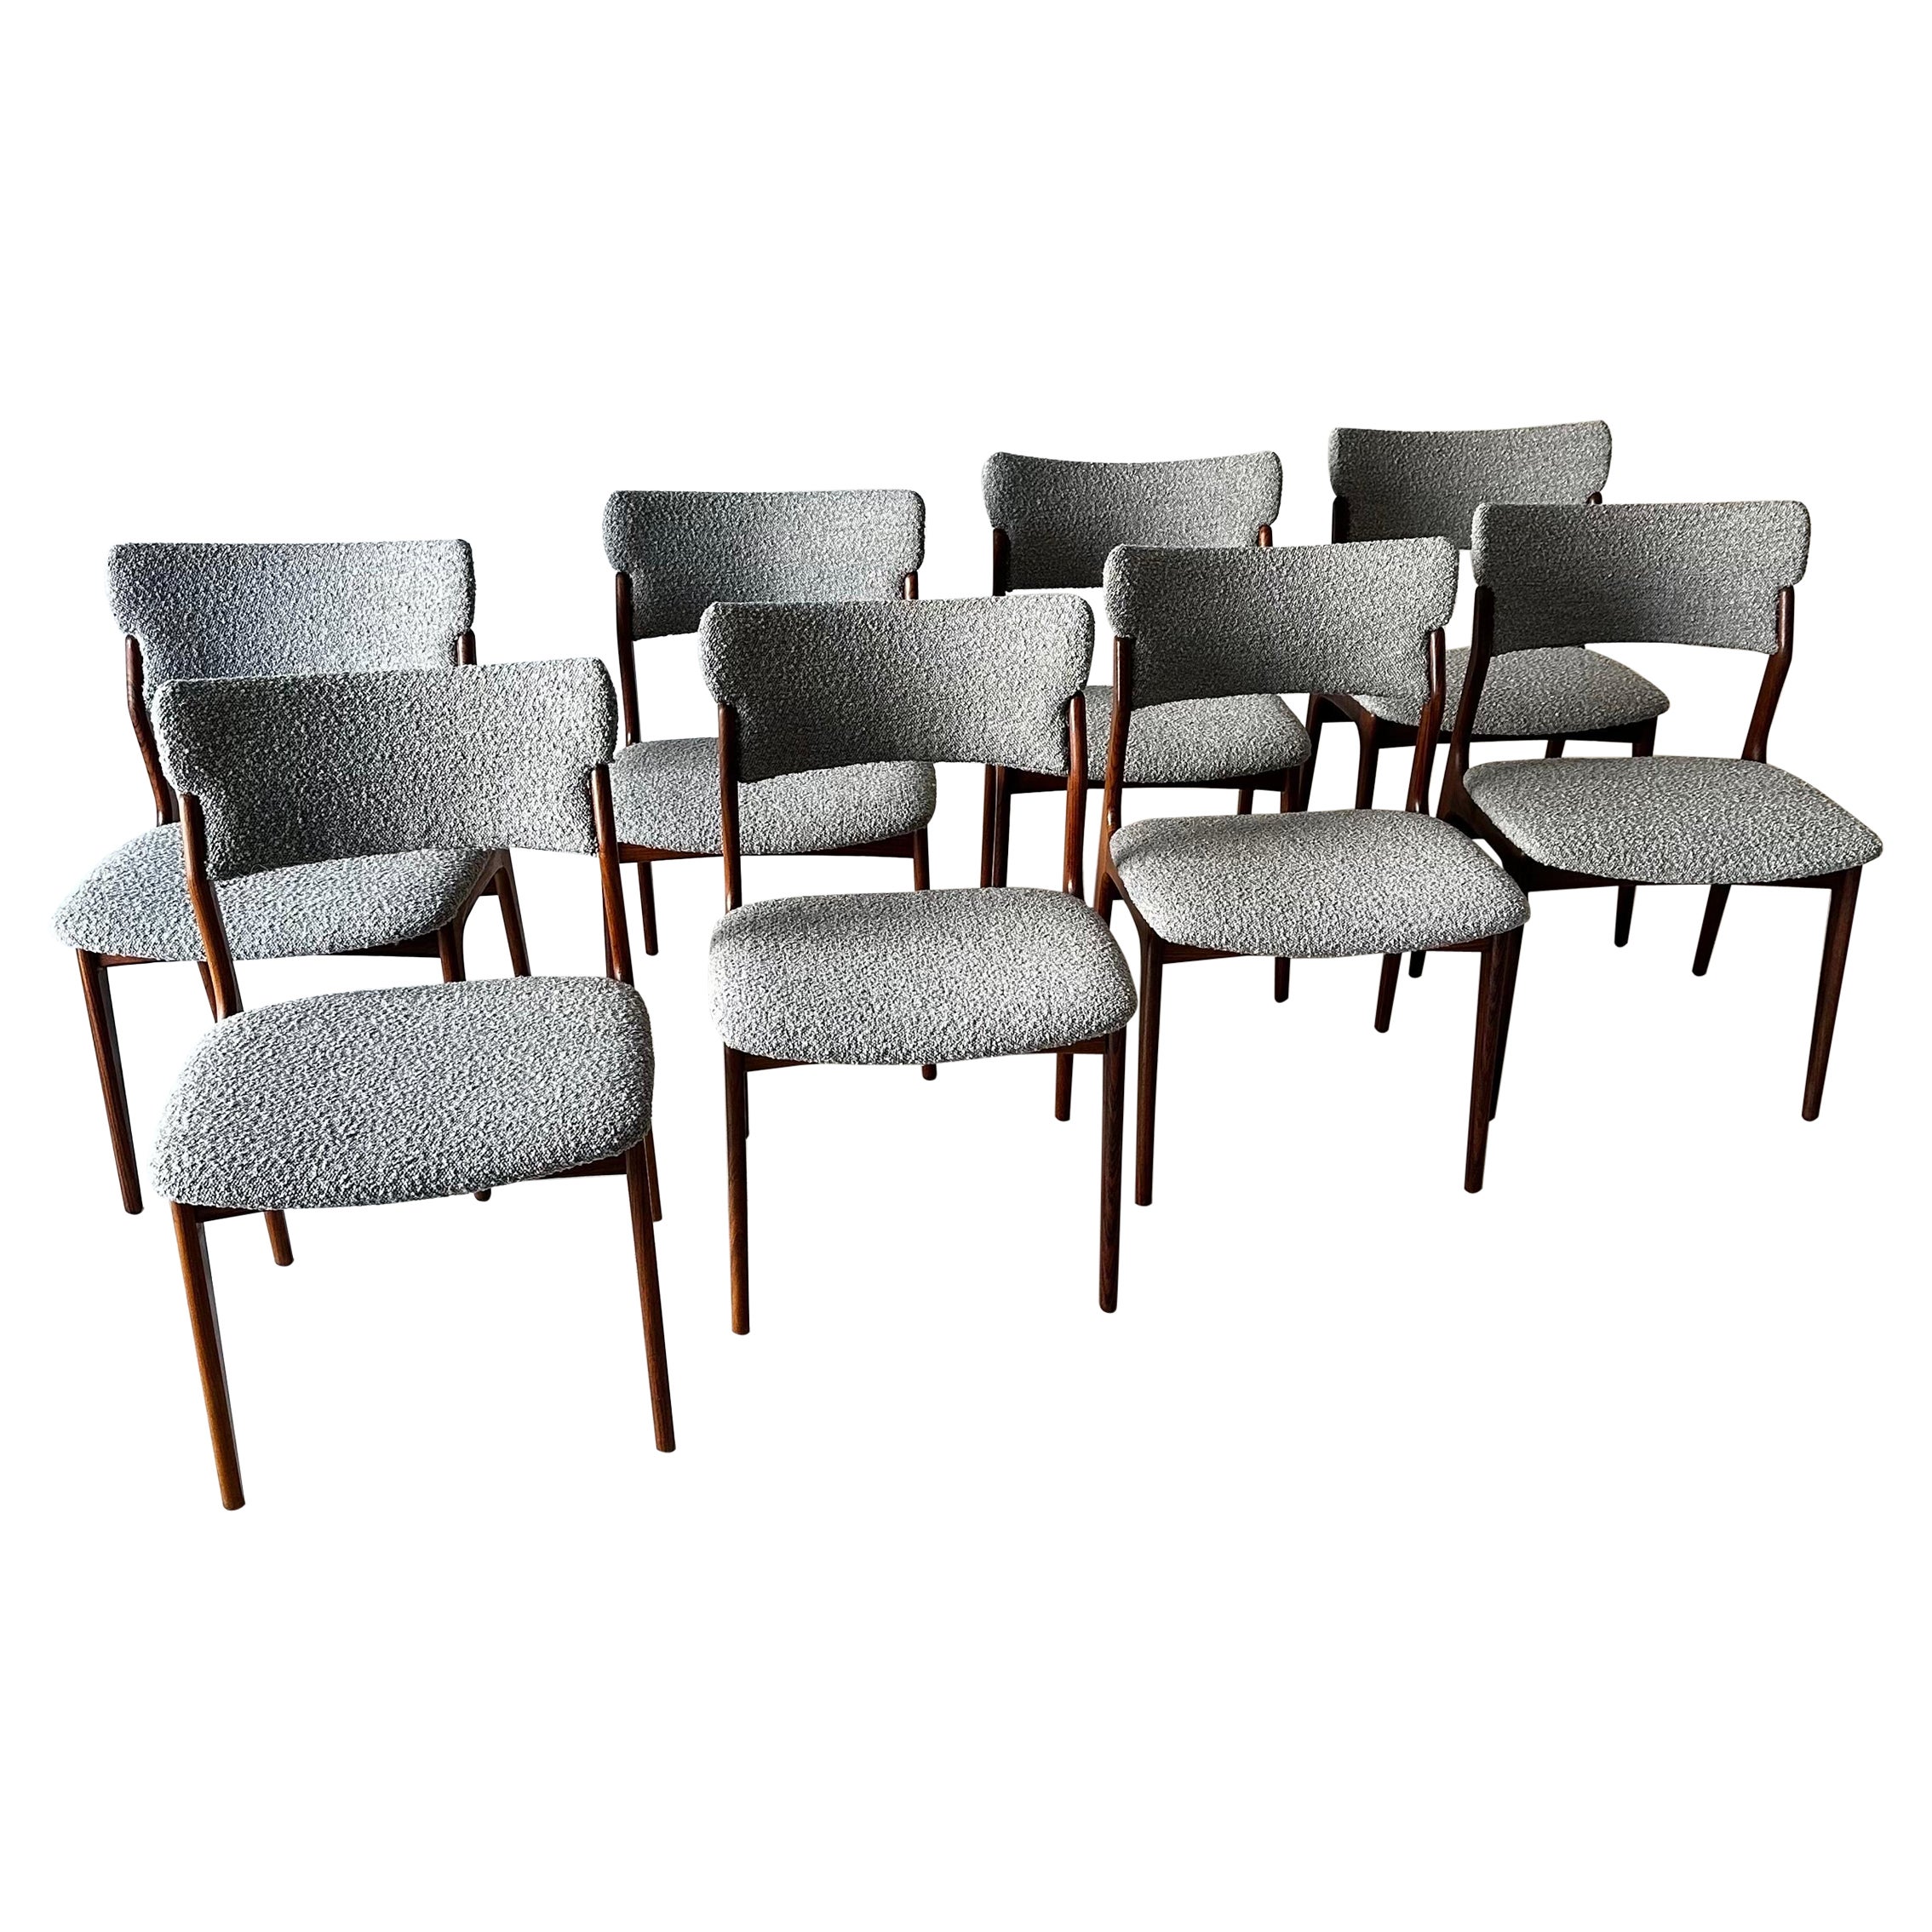 Rare Set of 8 Sculptural Scandinavian Dining Chairs, Denmark, 1960s For Sale